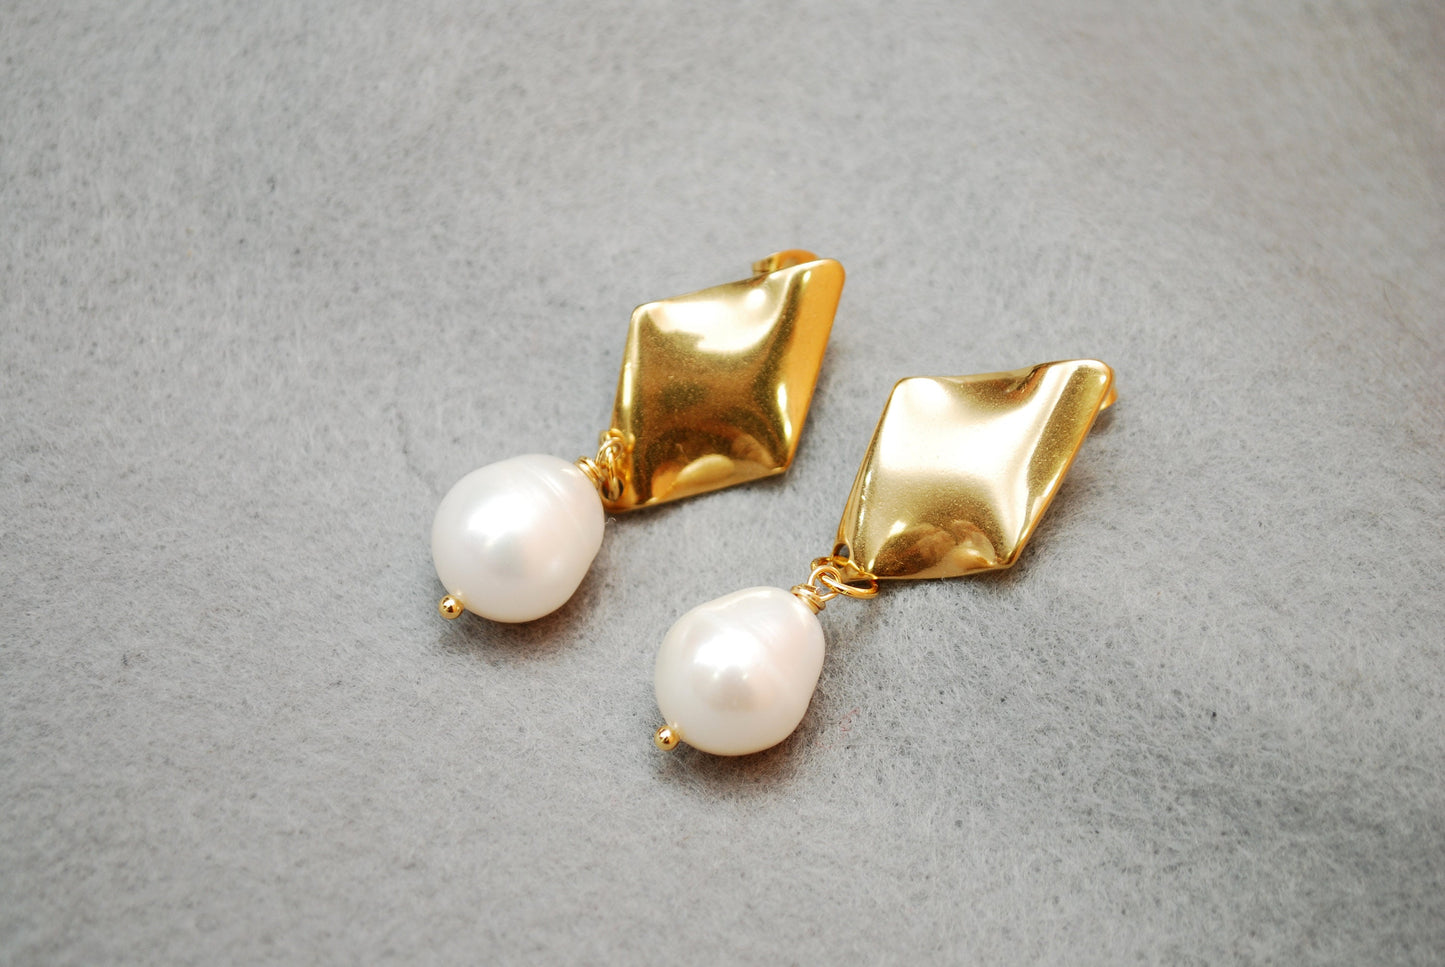 Chunky gold stainless steel earrings, Statement earrings with rhombus clasps", freshwater pearl earrings, Estibela design. 5cm - 2"